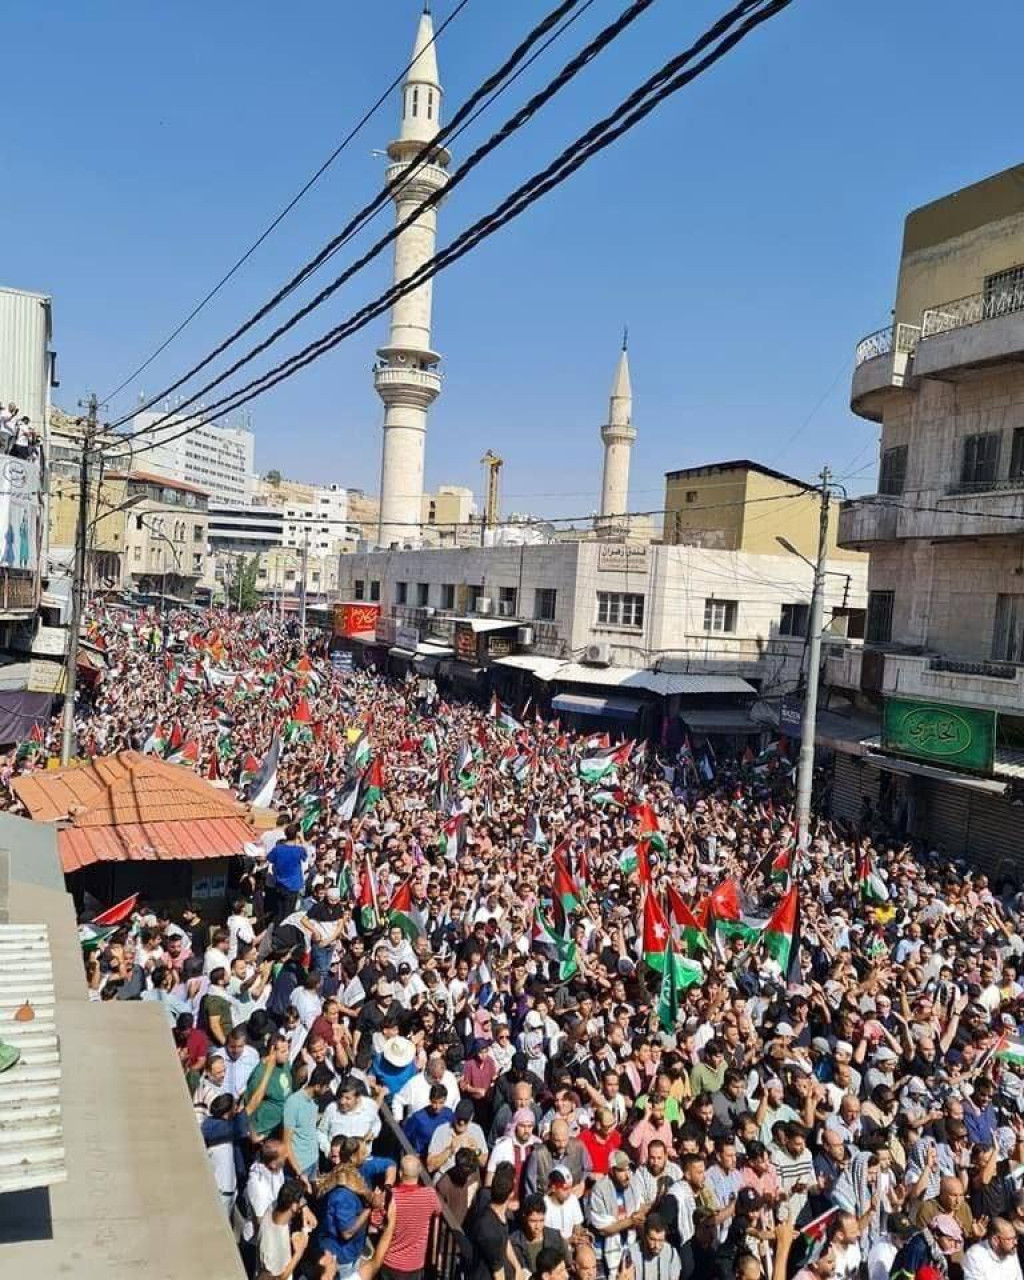 &lt;p&gt;Skupovi podrške Palestincima širom Bliskog istoka - Amman/Jordan&lt;/p&gt;